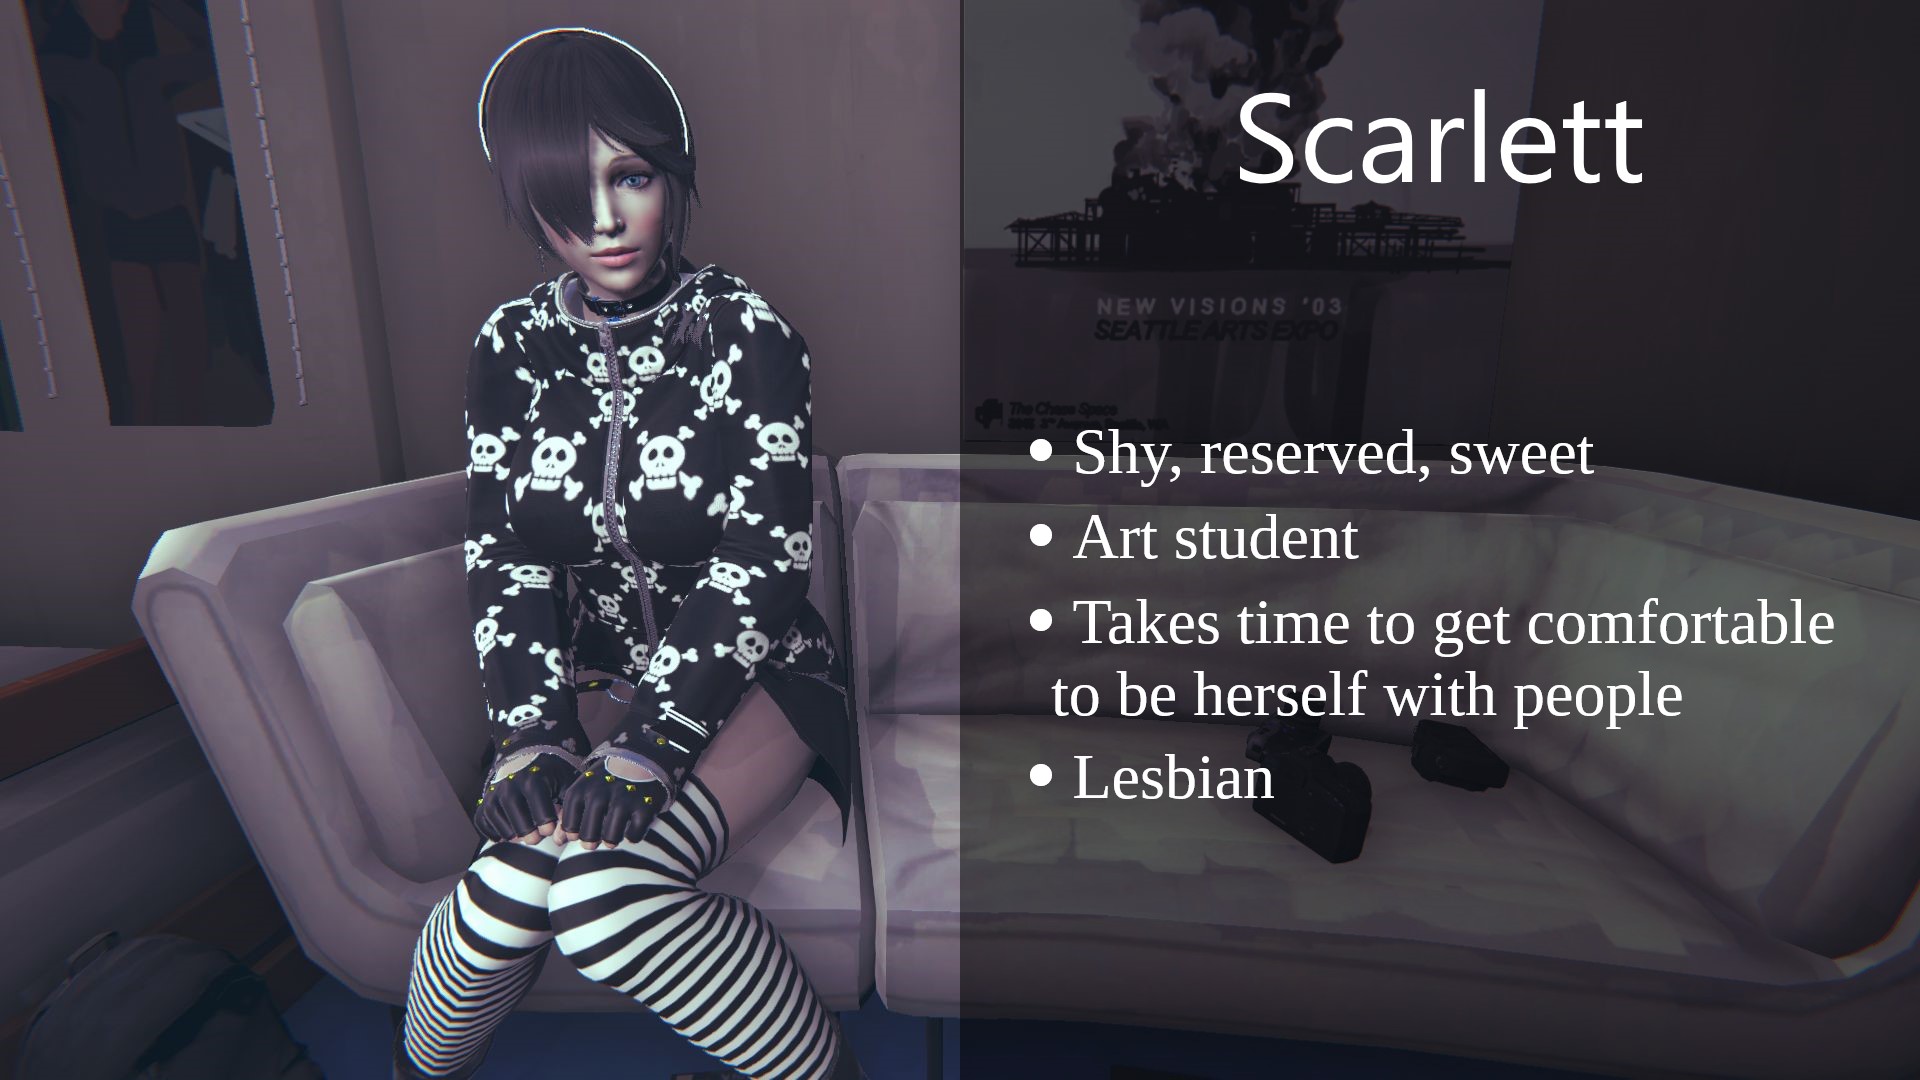 scarlett intro card.jpg